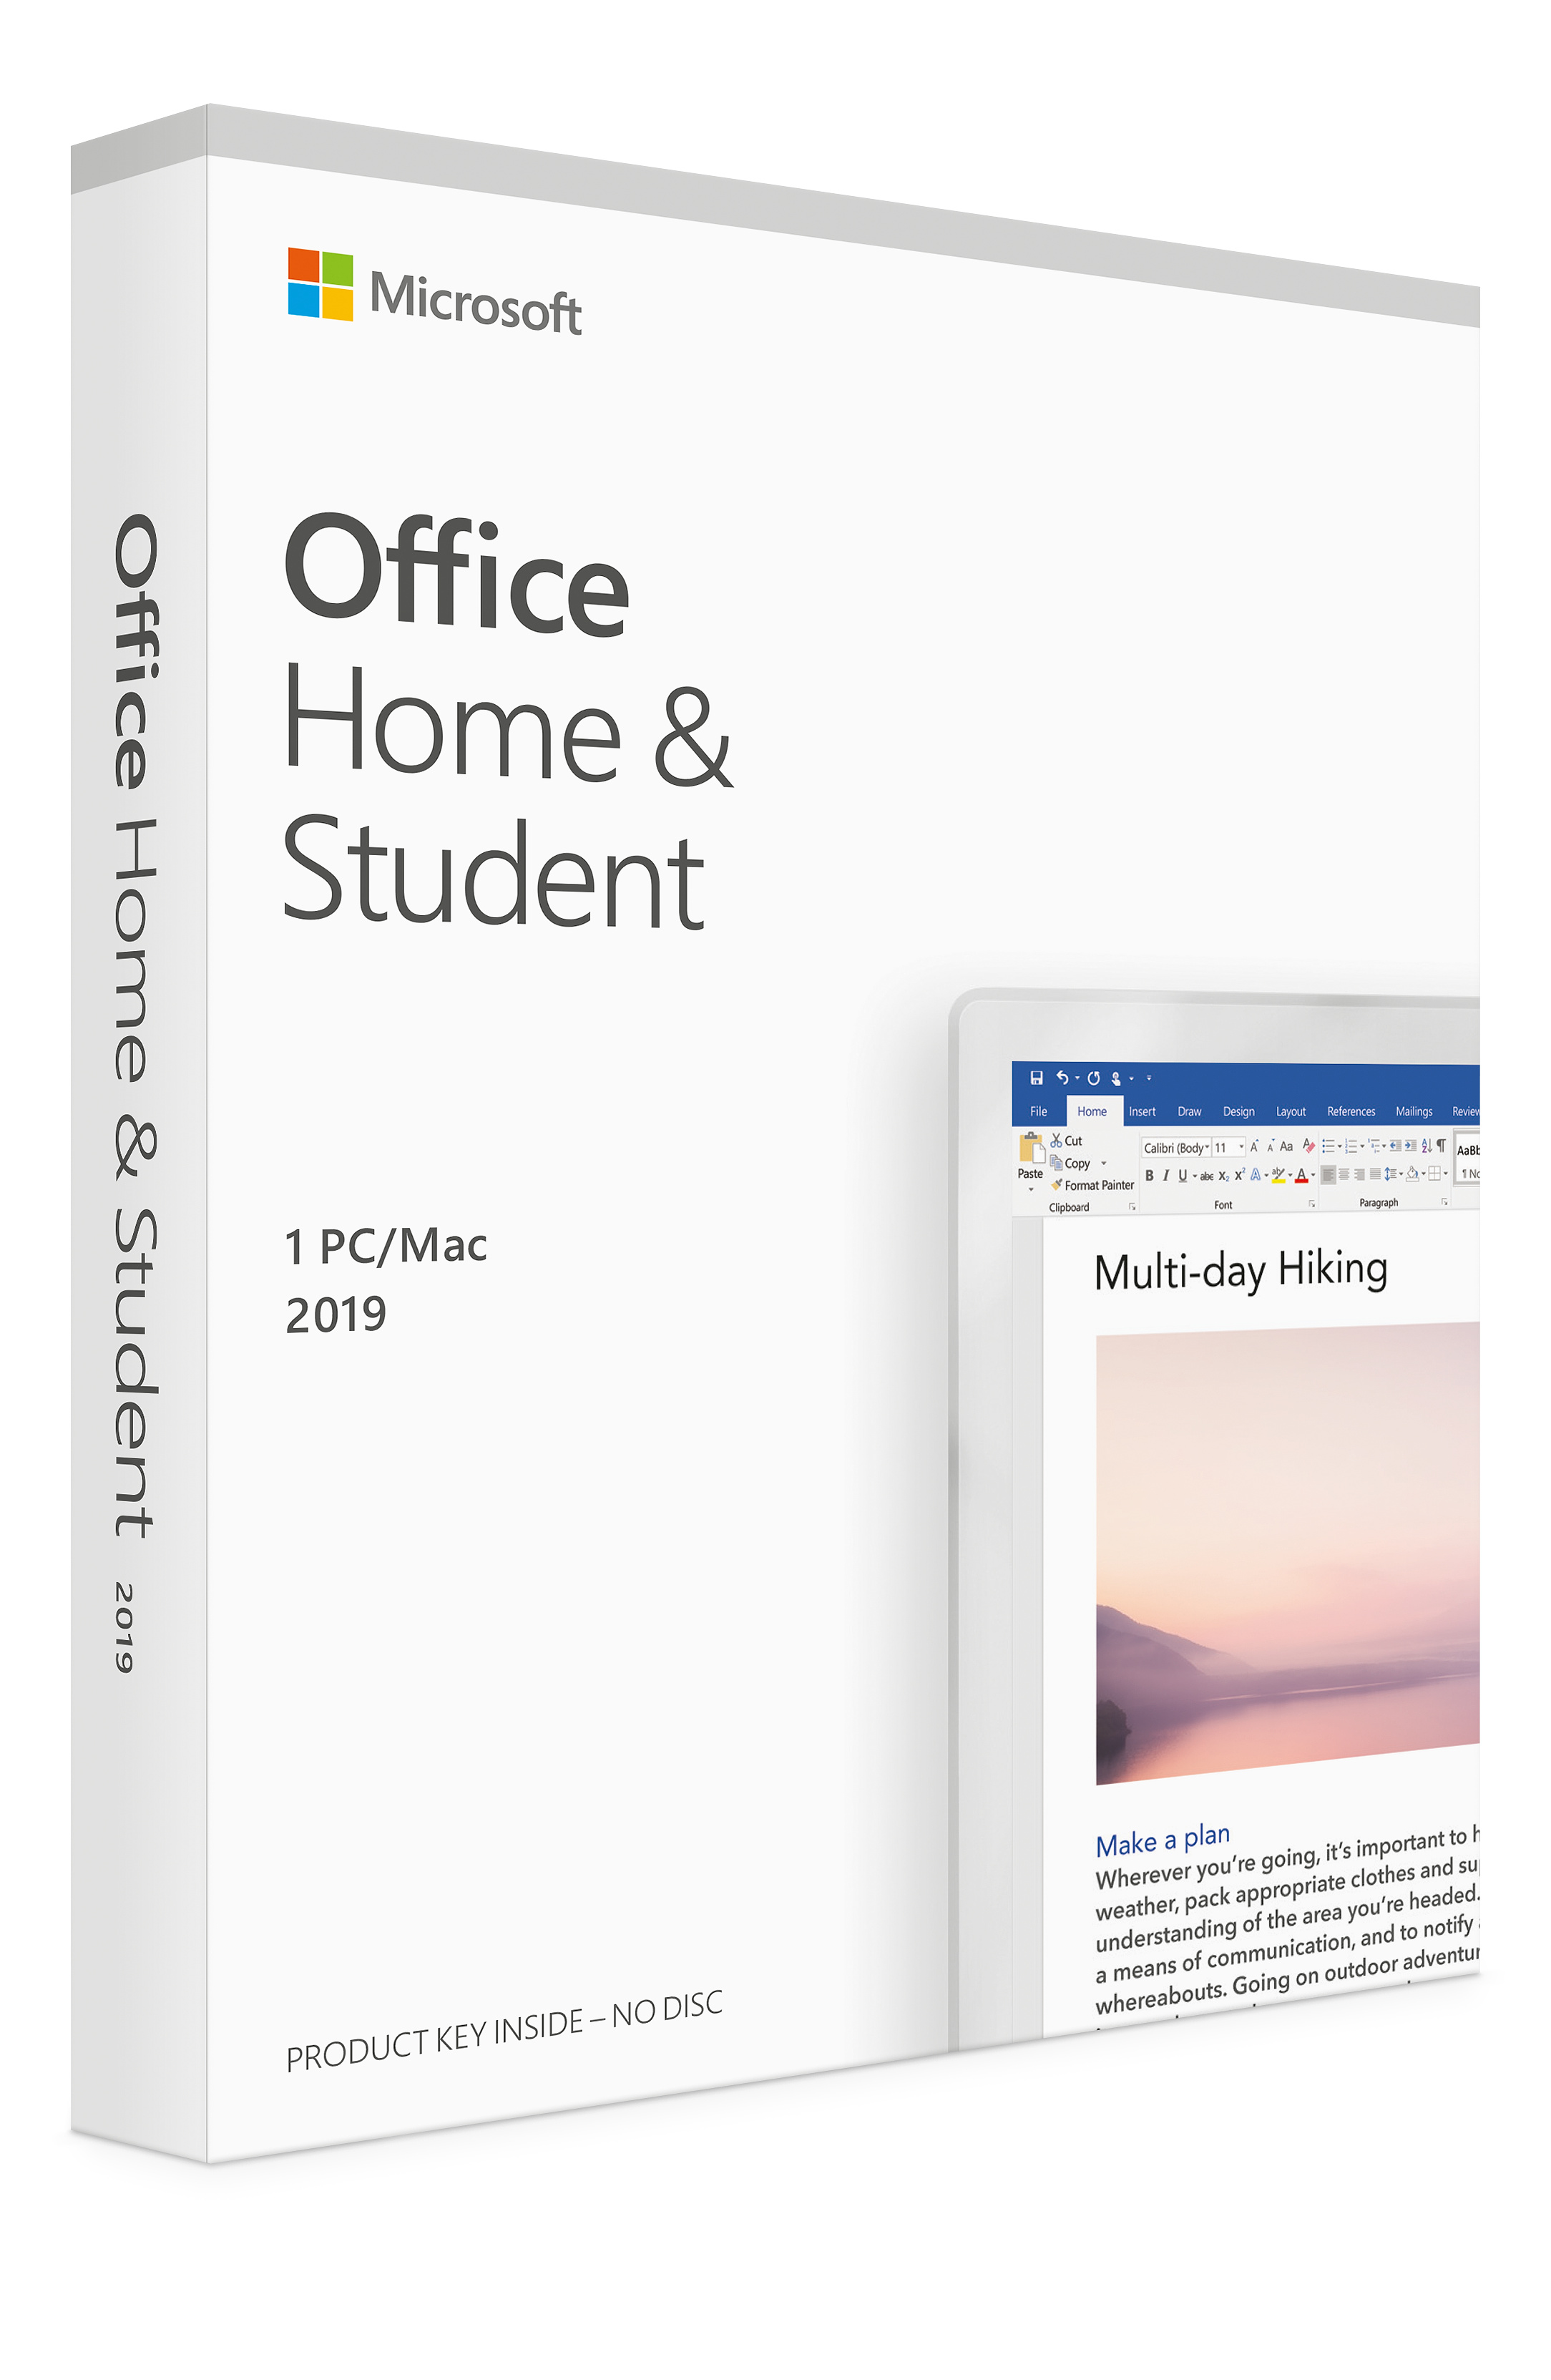 Microsoft Office Home & Student 1 PC/Mac 2019